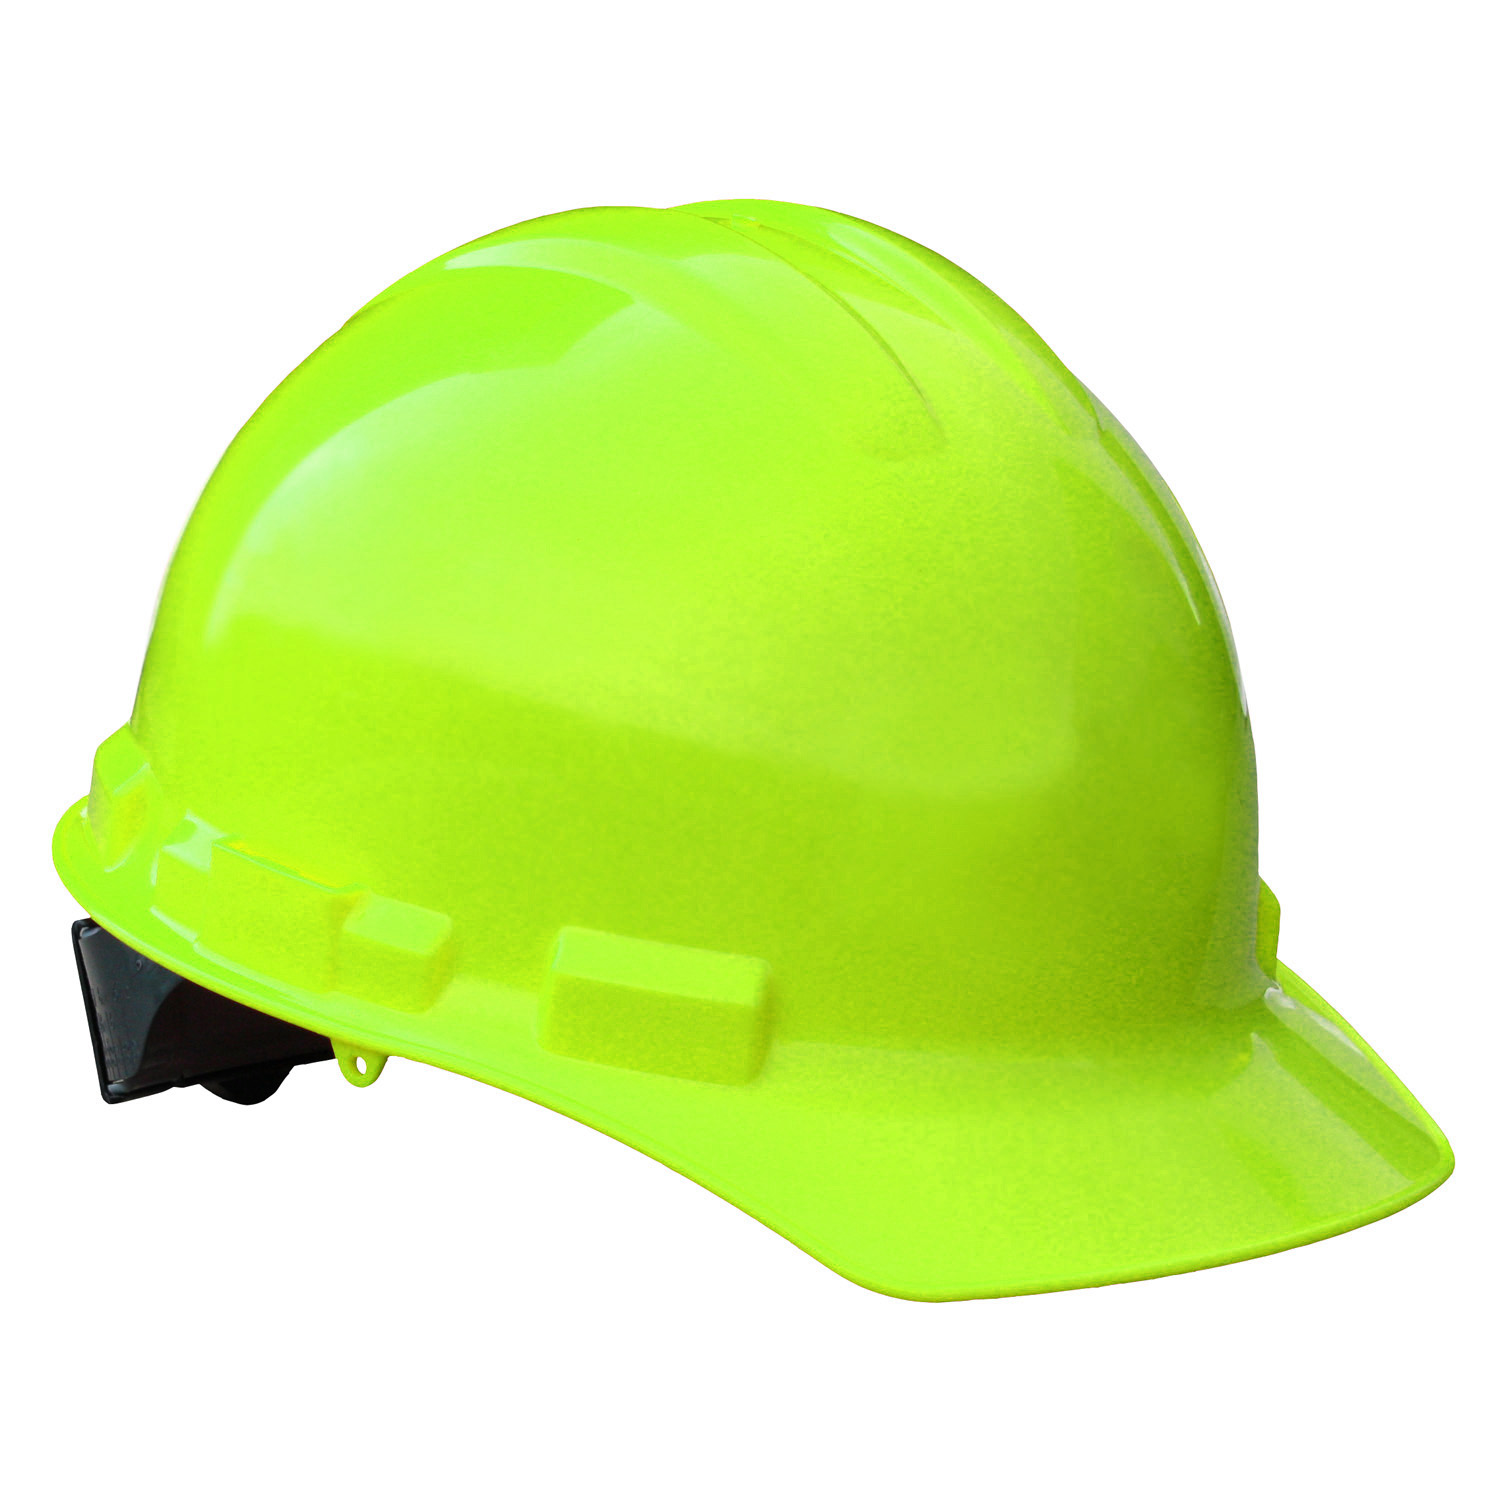 Granite™ Cap Style 4 Point Ratchet Hard Hat - Hi-Vis Green